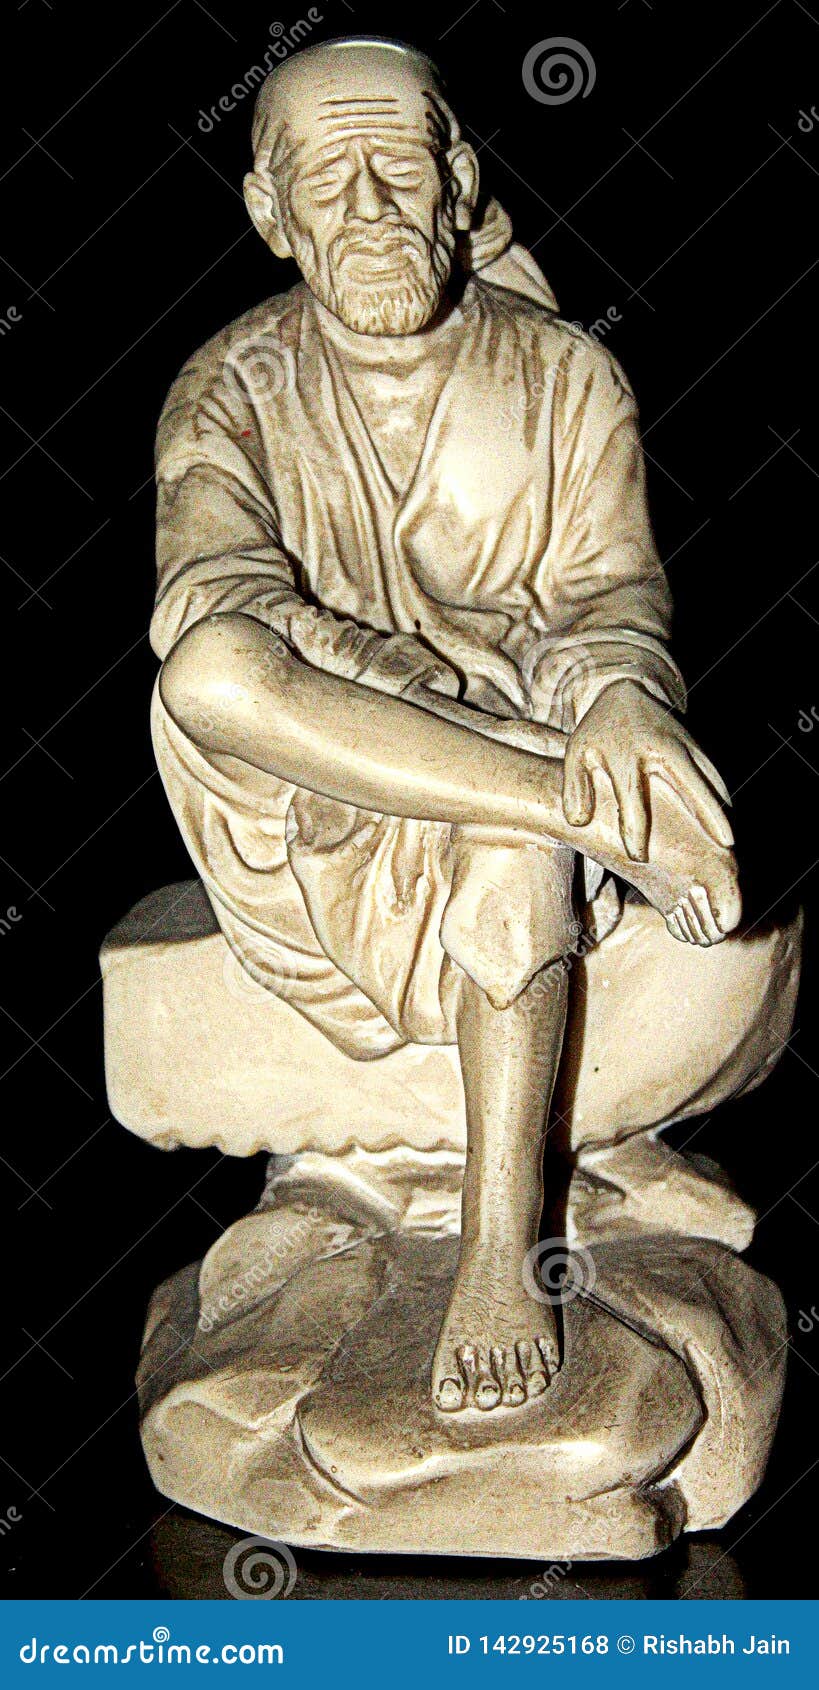 Sai baba god of hinduisim editorial stock photo. Image of statue ...